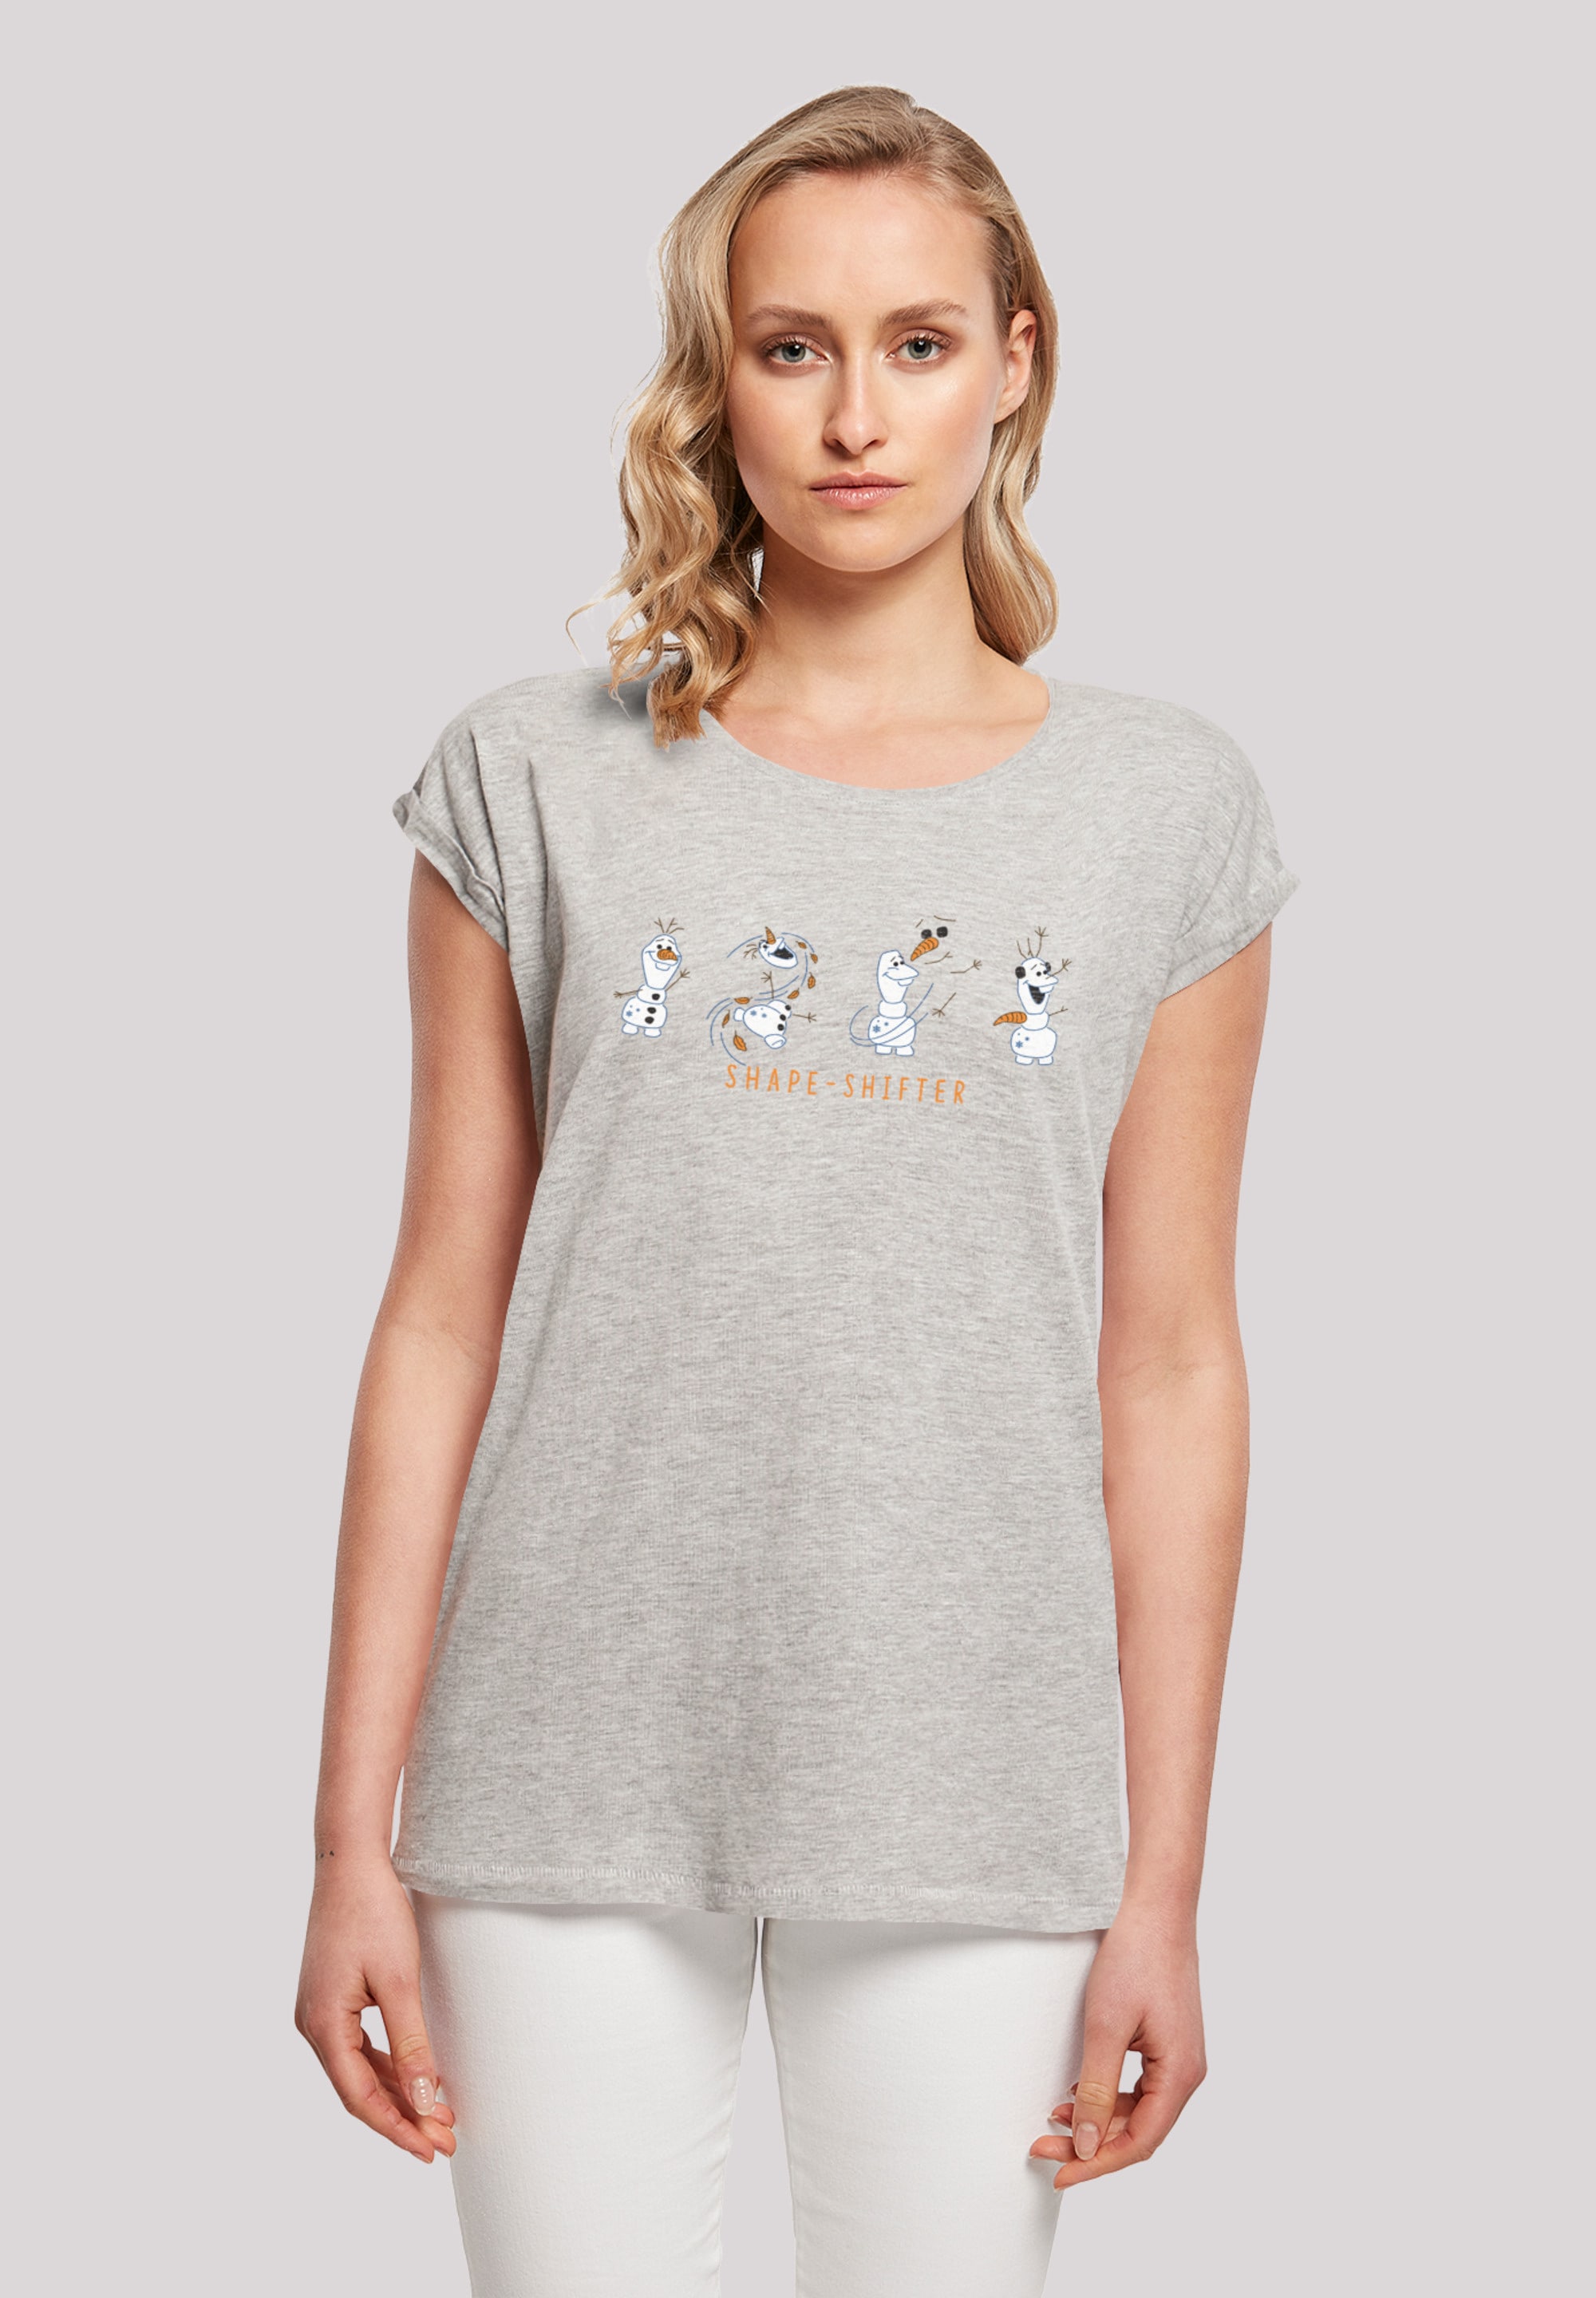 T-Shirt »Disney Frozen 2 Olaf Shape-Shifter«, Print